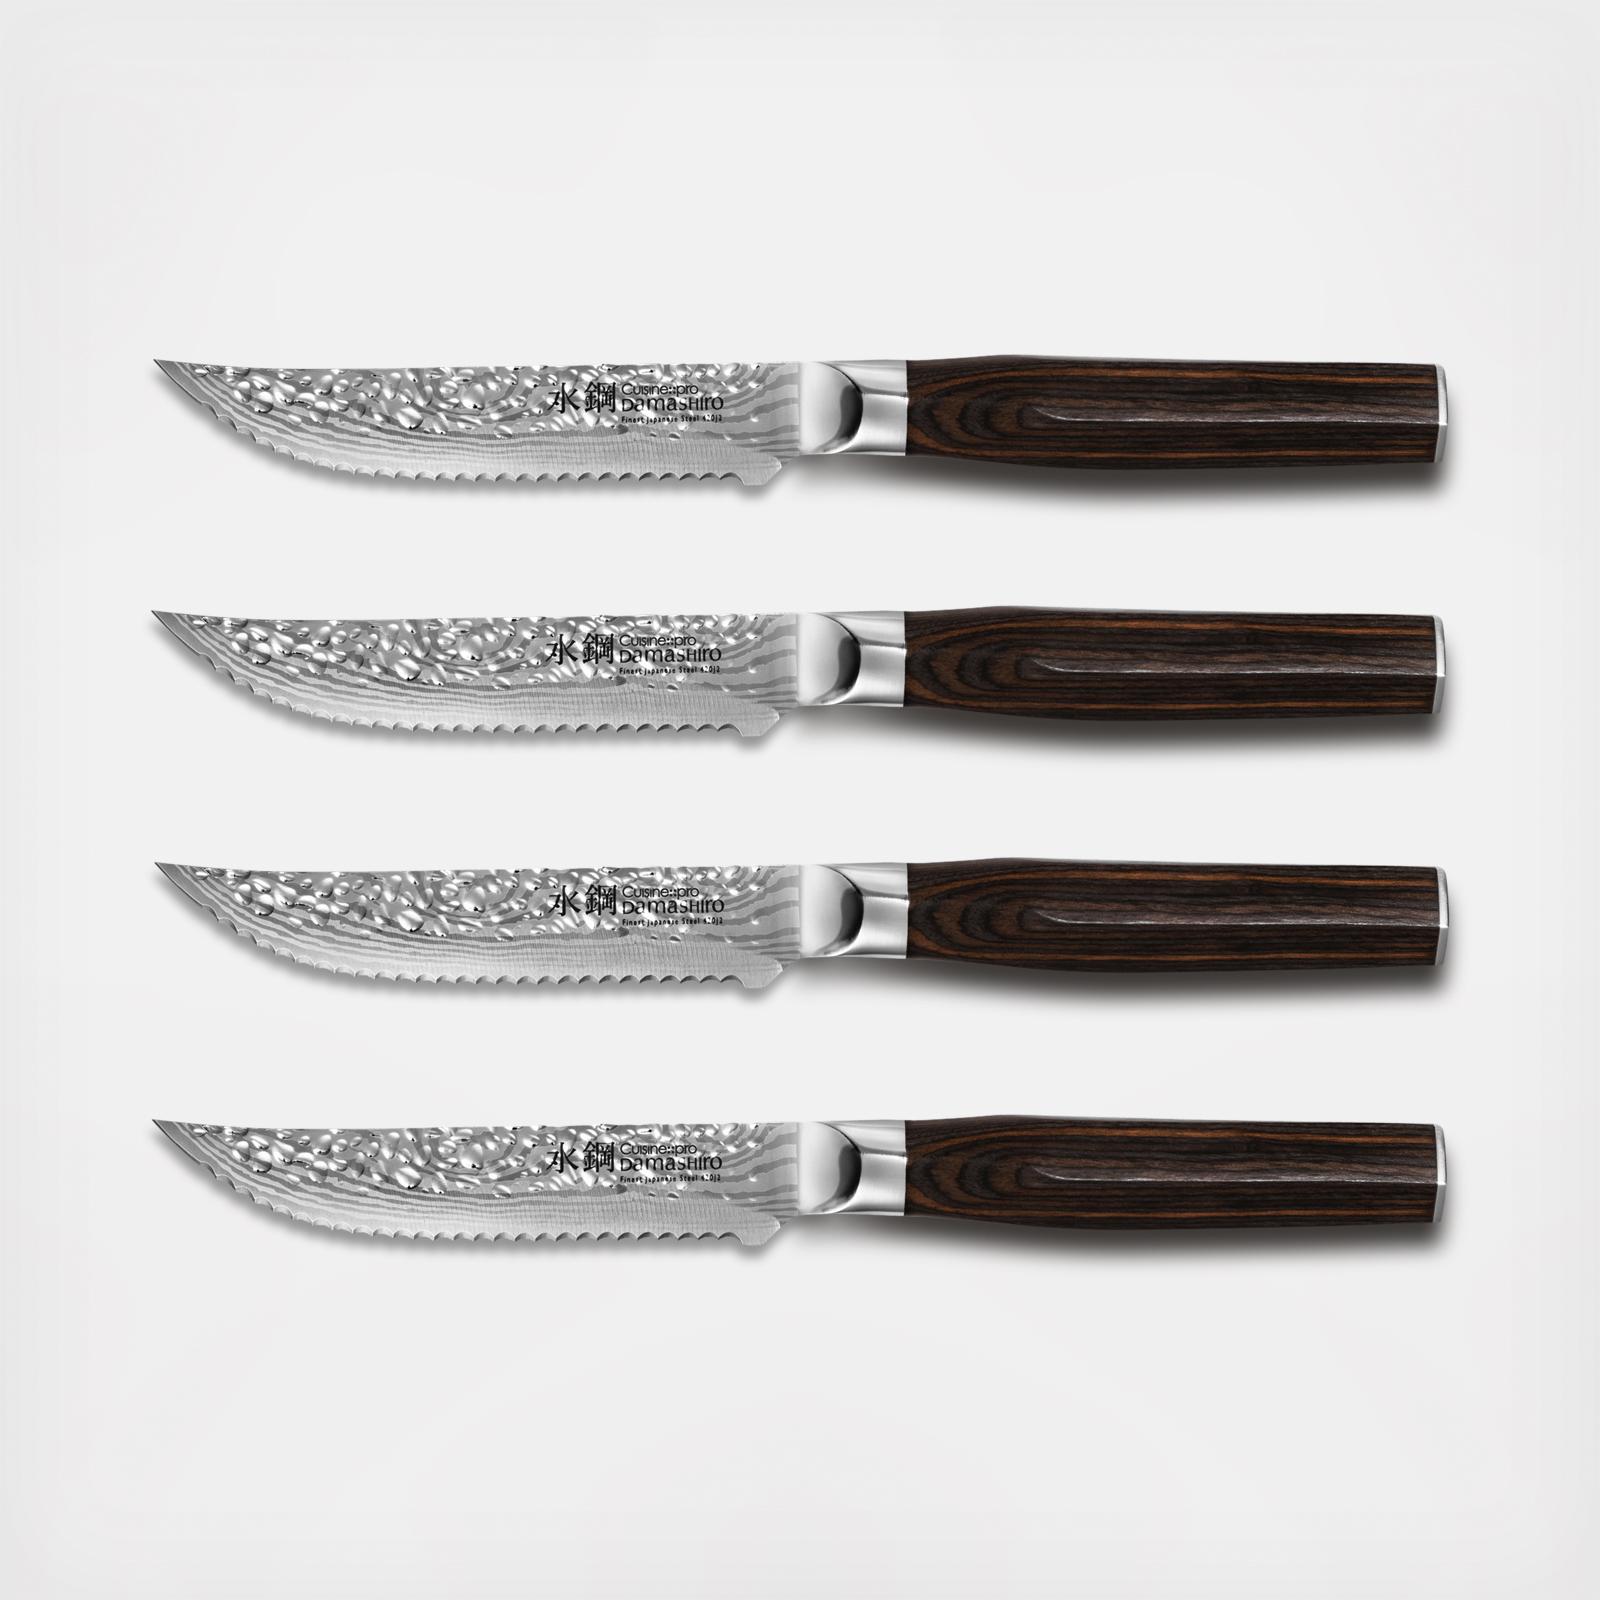 Cuisine Pro Wolfgang Starke Stainless Steel Steak Knife, Set of 4